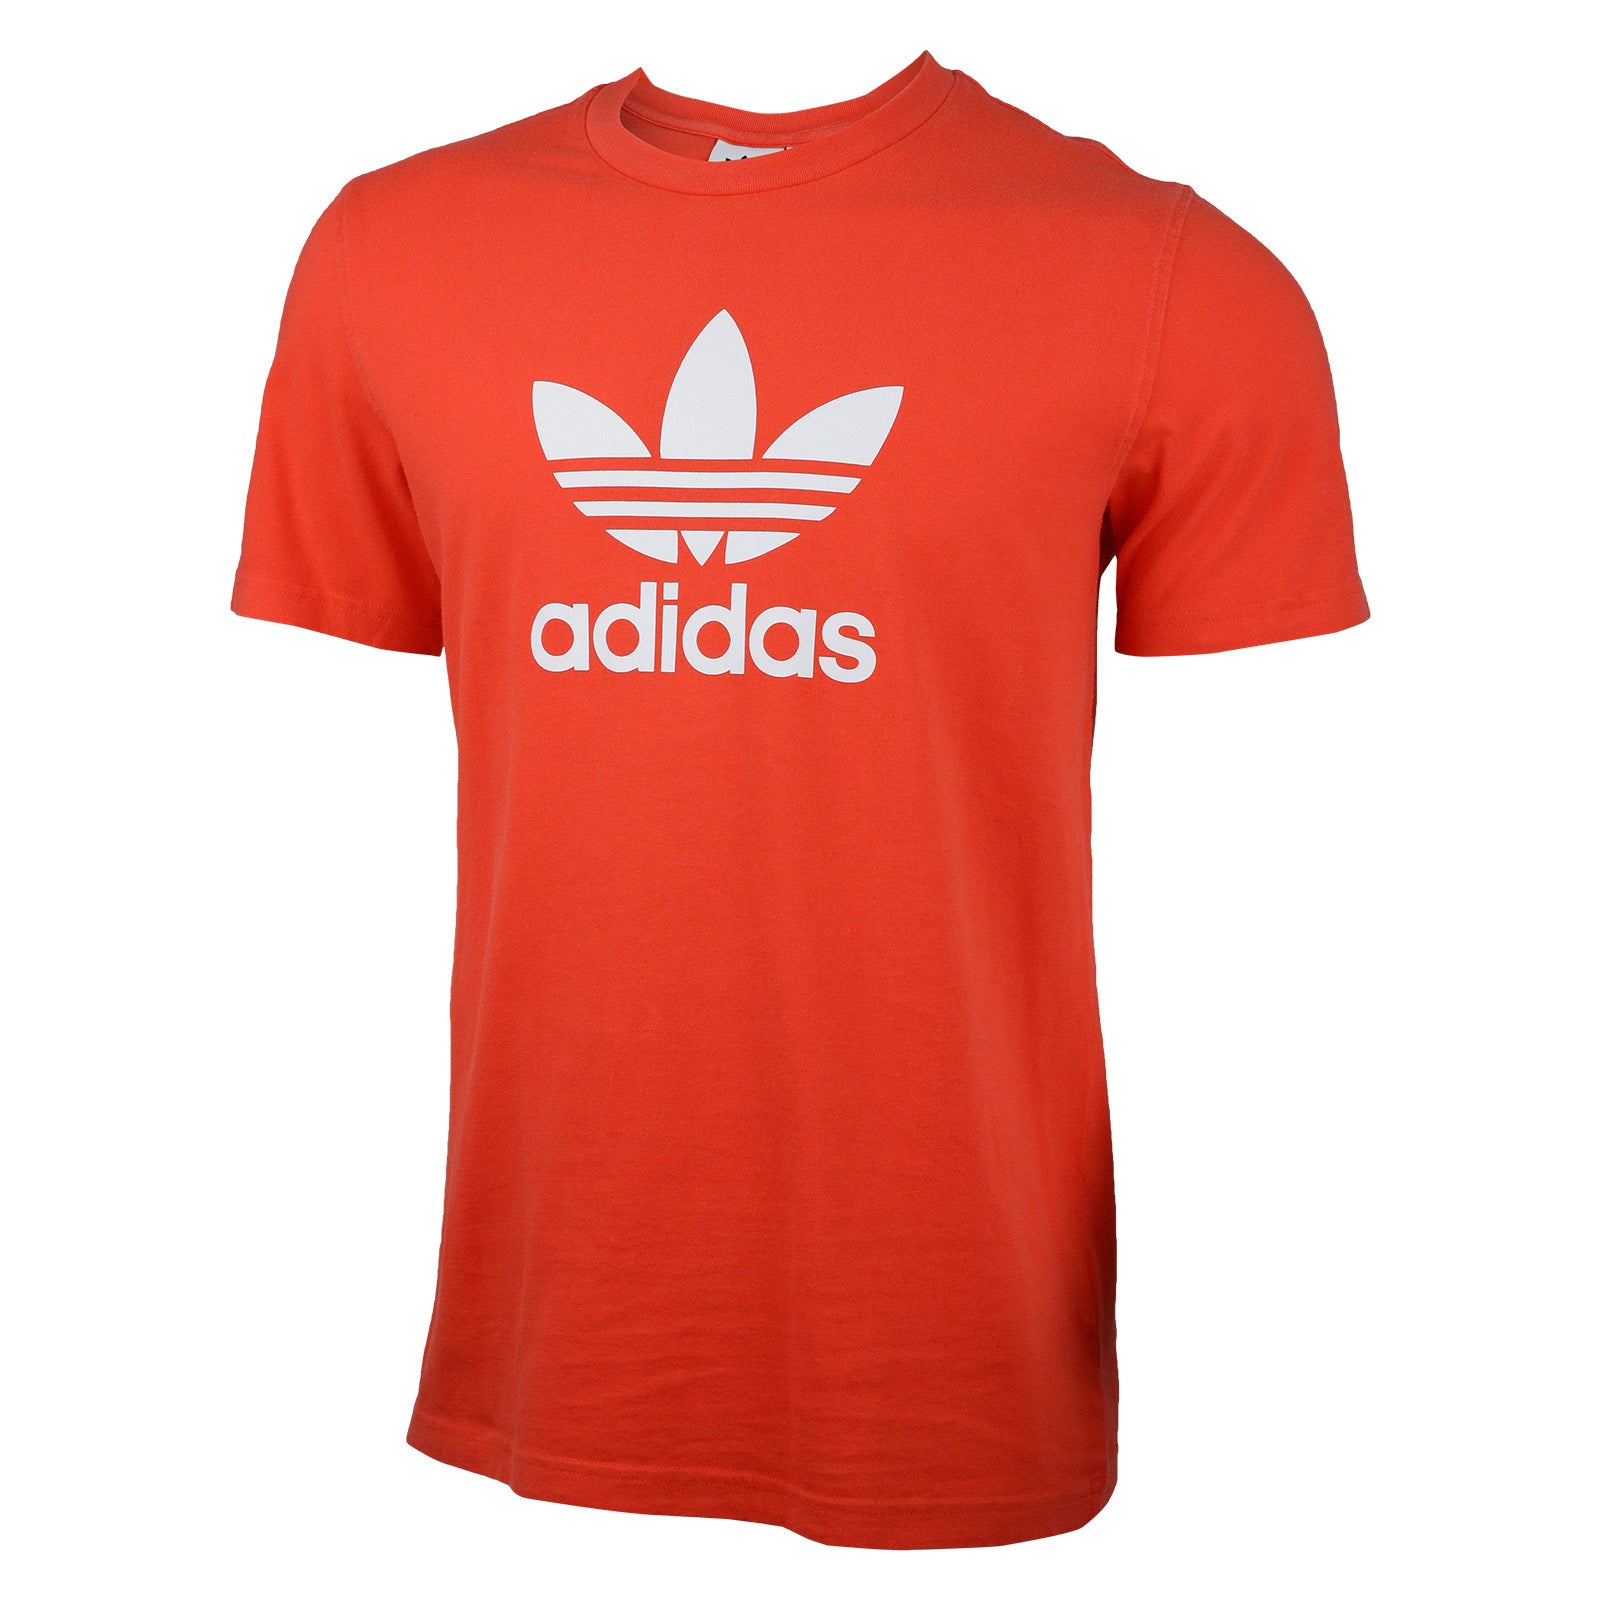 Buy adidas Men's Originals Trefoil T-Shirt Orange du0358 (Size S) at